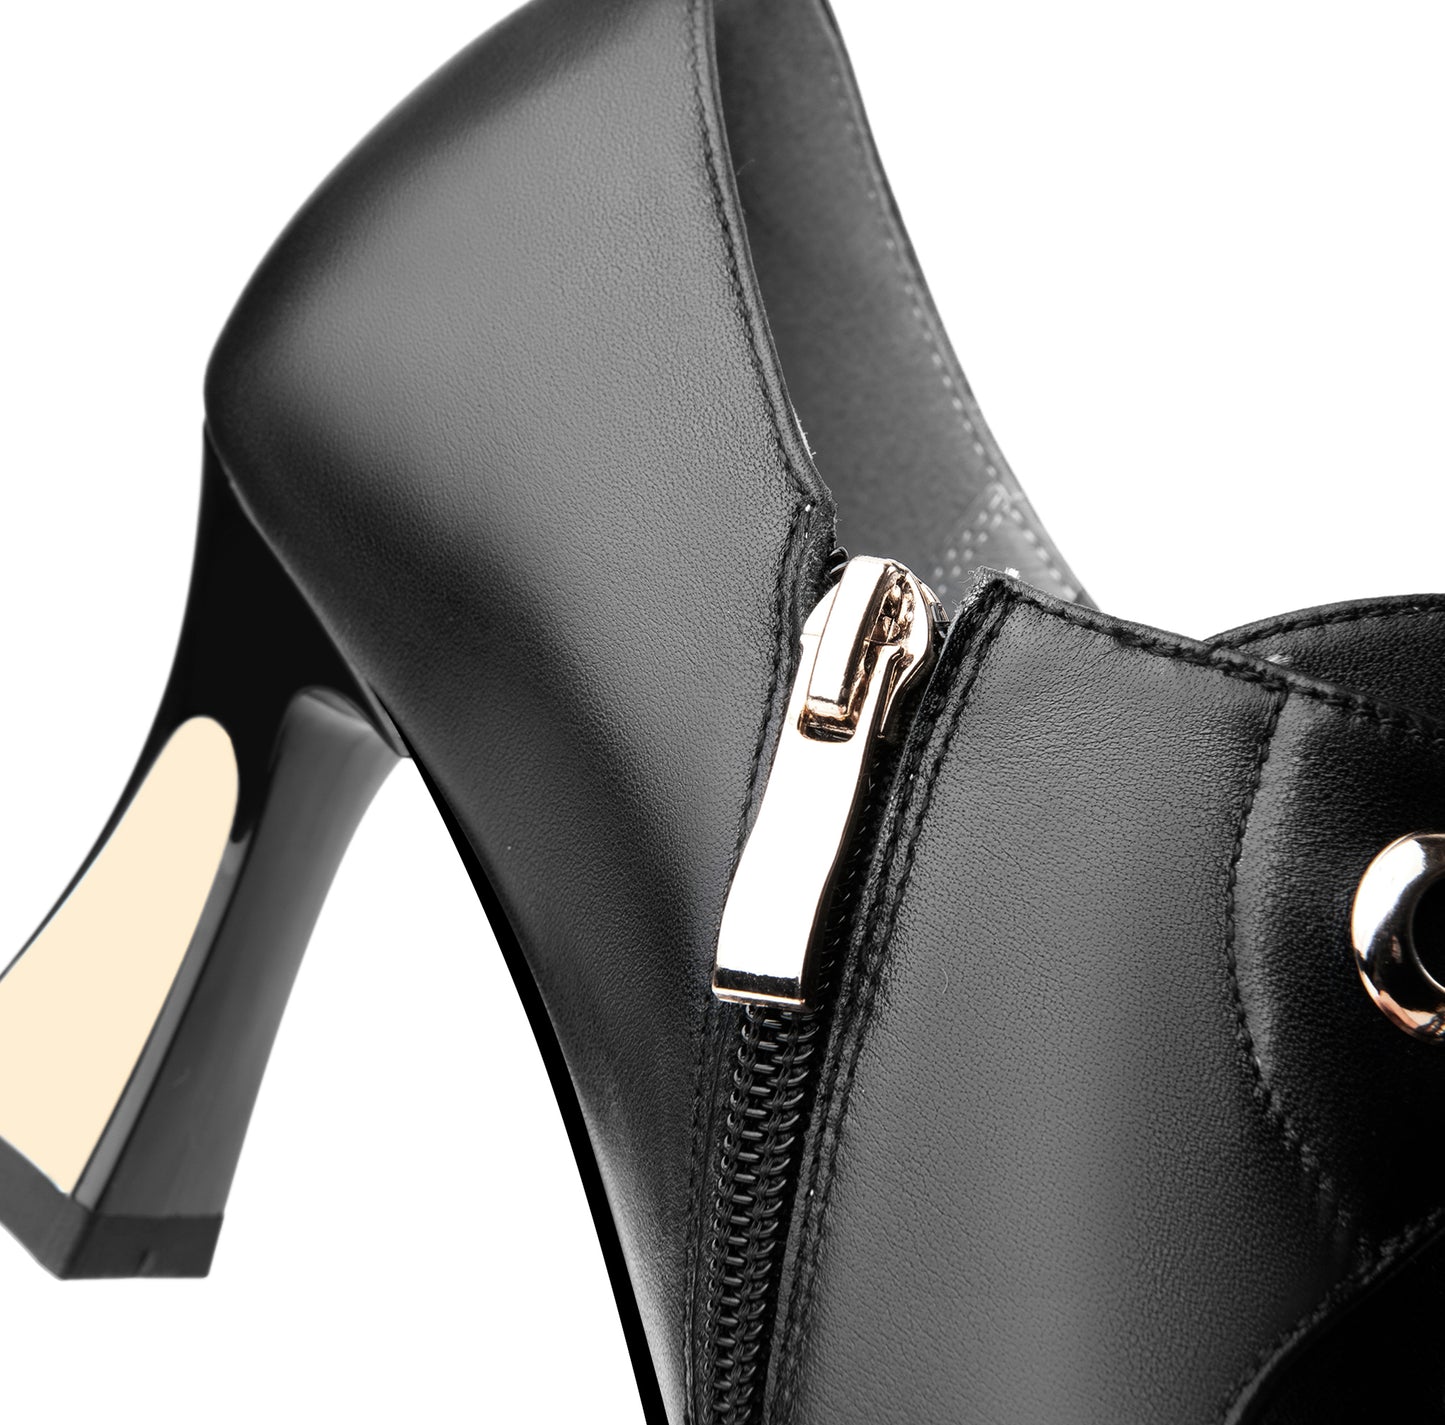 TinaCus Genuine Leather Women's Handmade Pointed Toe Elegant Bowtie Spool Heel Pumps with Side Zipper